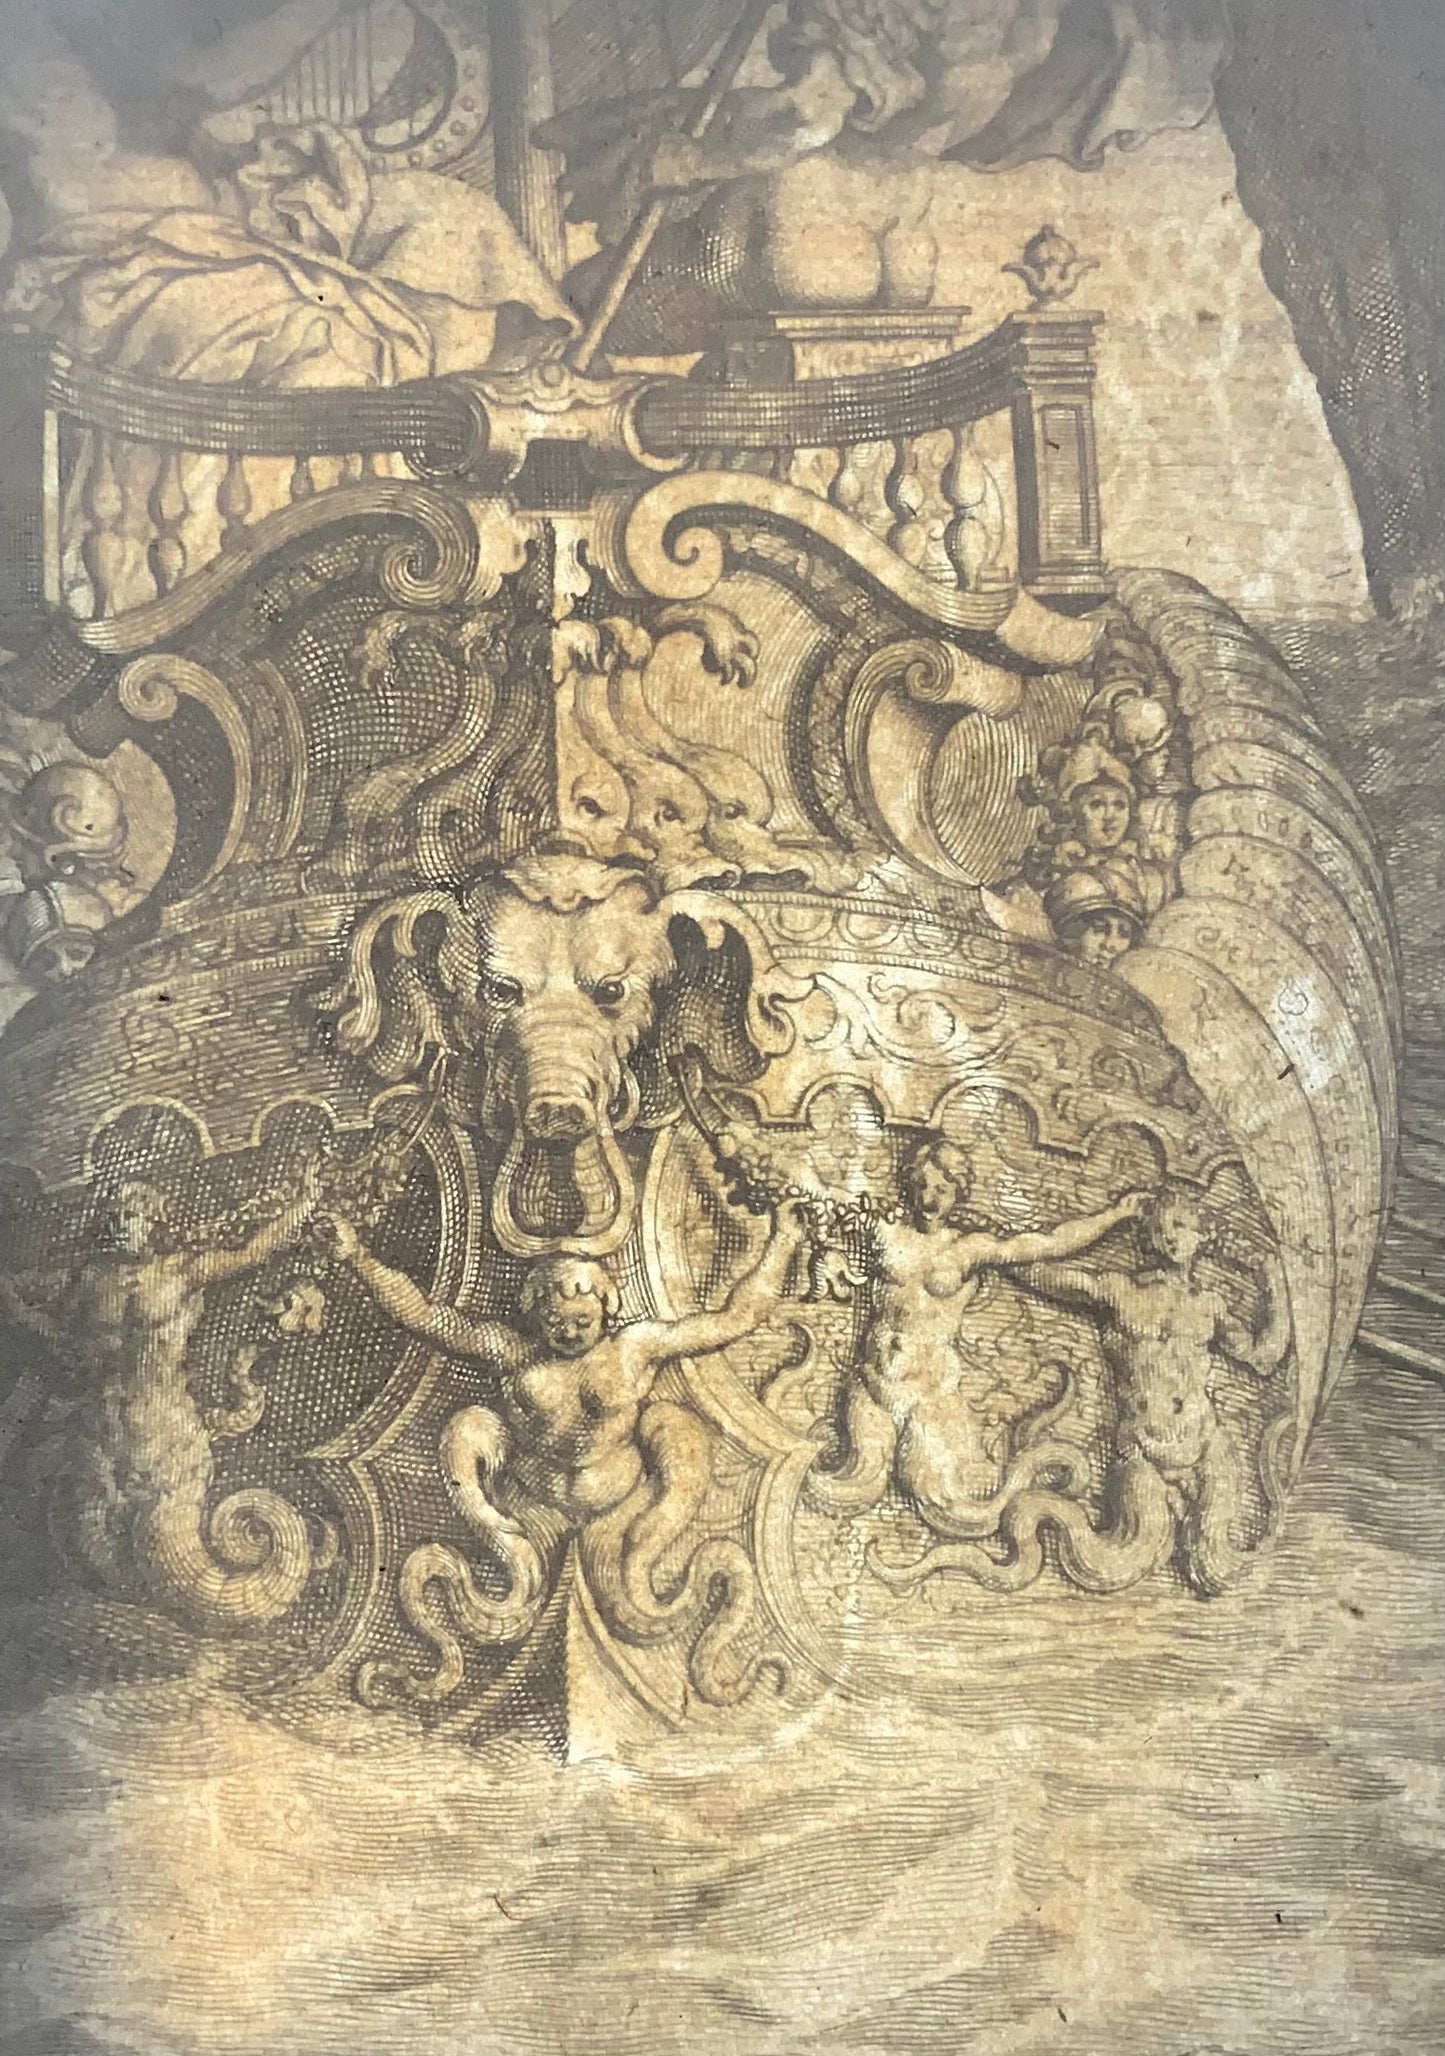 1630 Symplegades, Cornelis Bloemaert (1603-1692) after Pierre Brebiette, folio, classical art